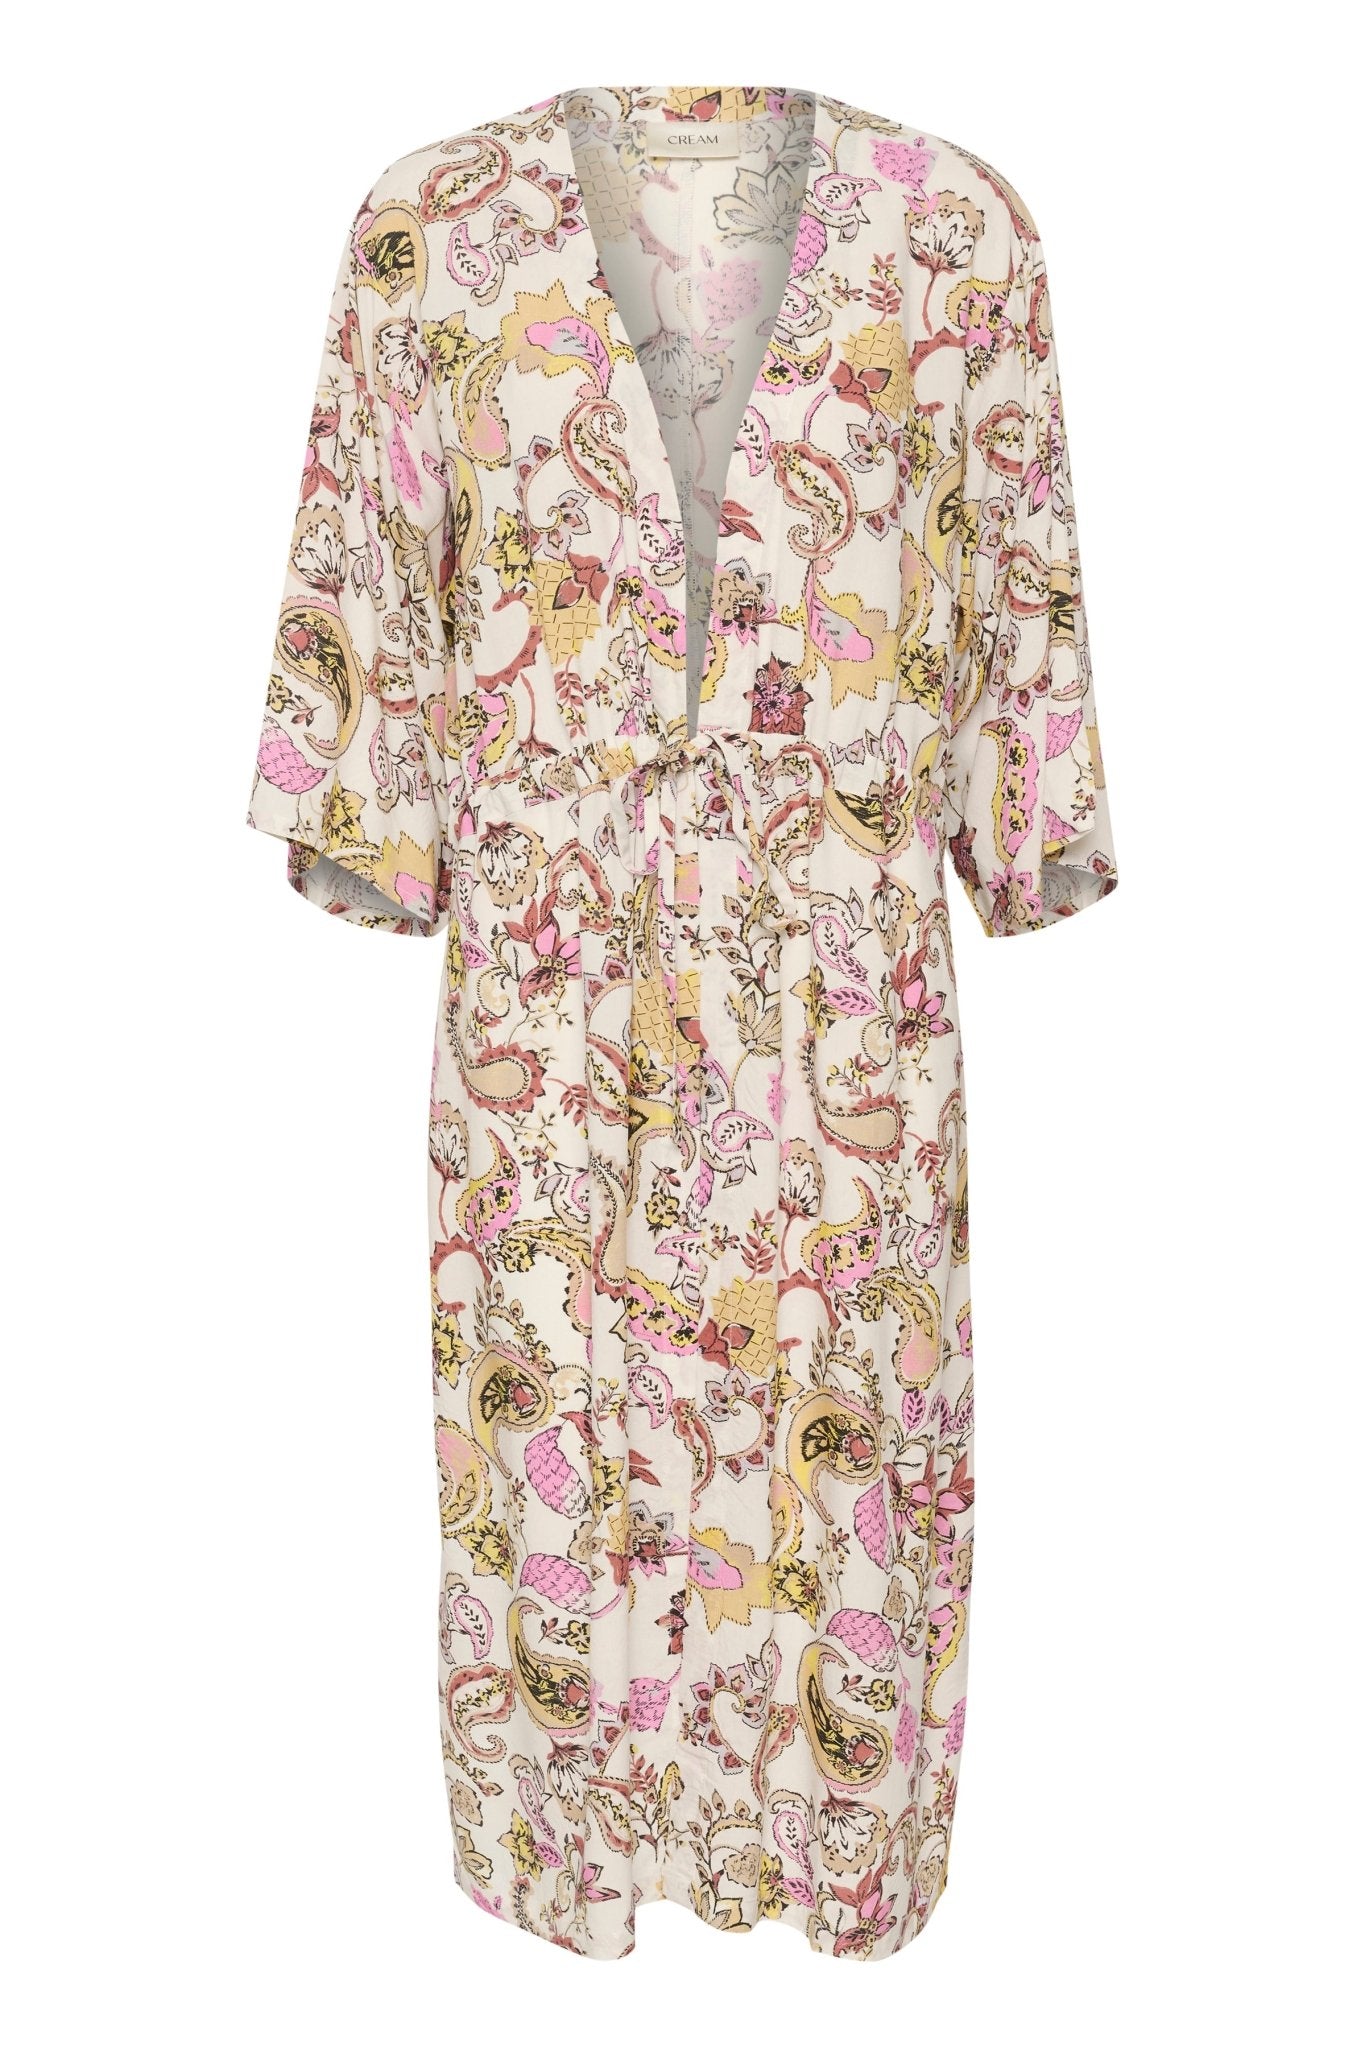 Cania Kimono by Cream - Paisley Print - Blue Sky Fashions & Lingerie